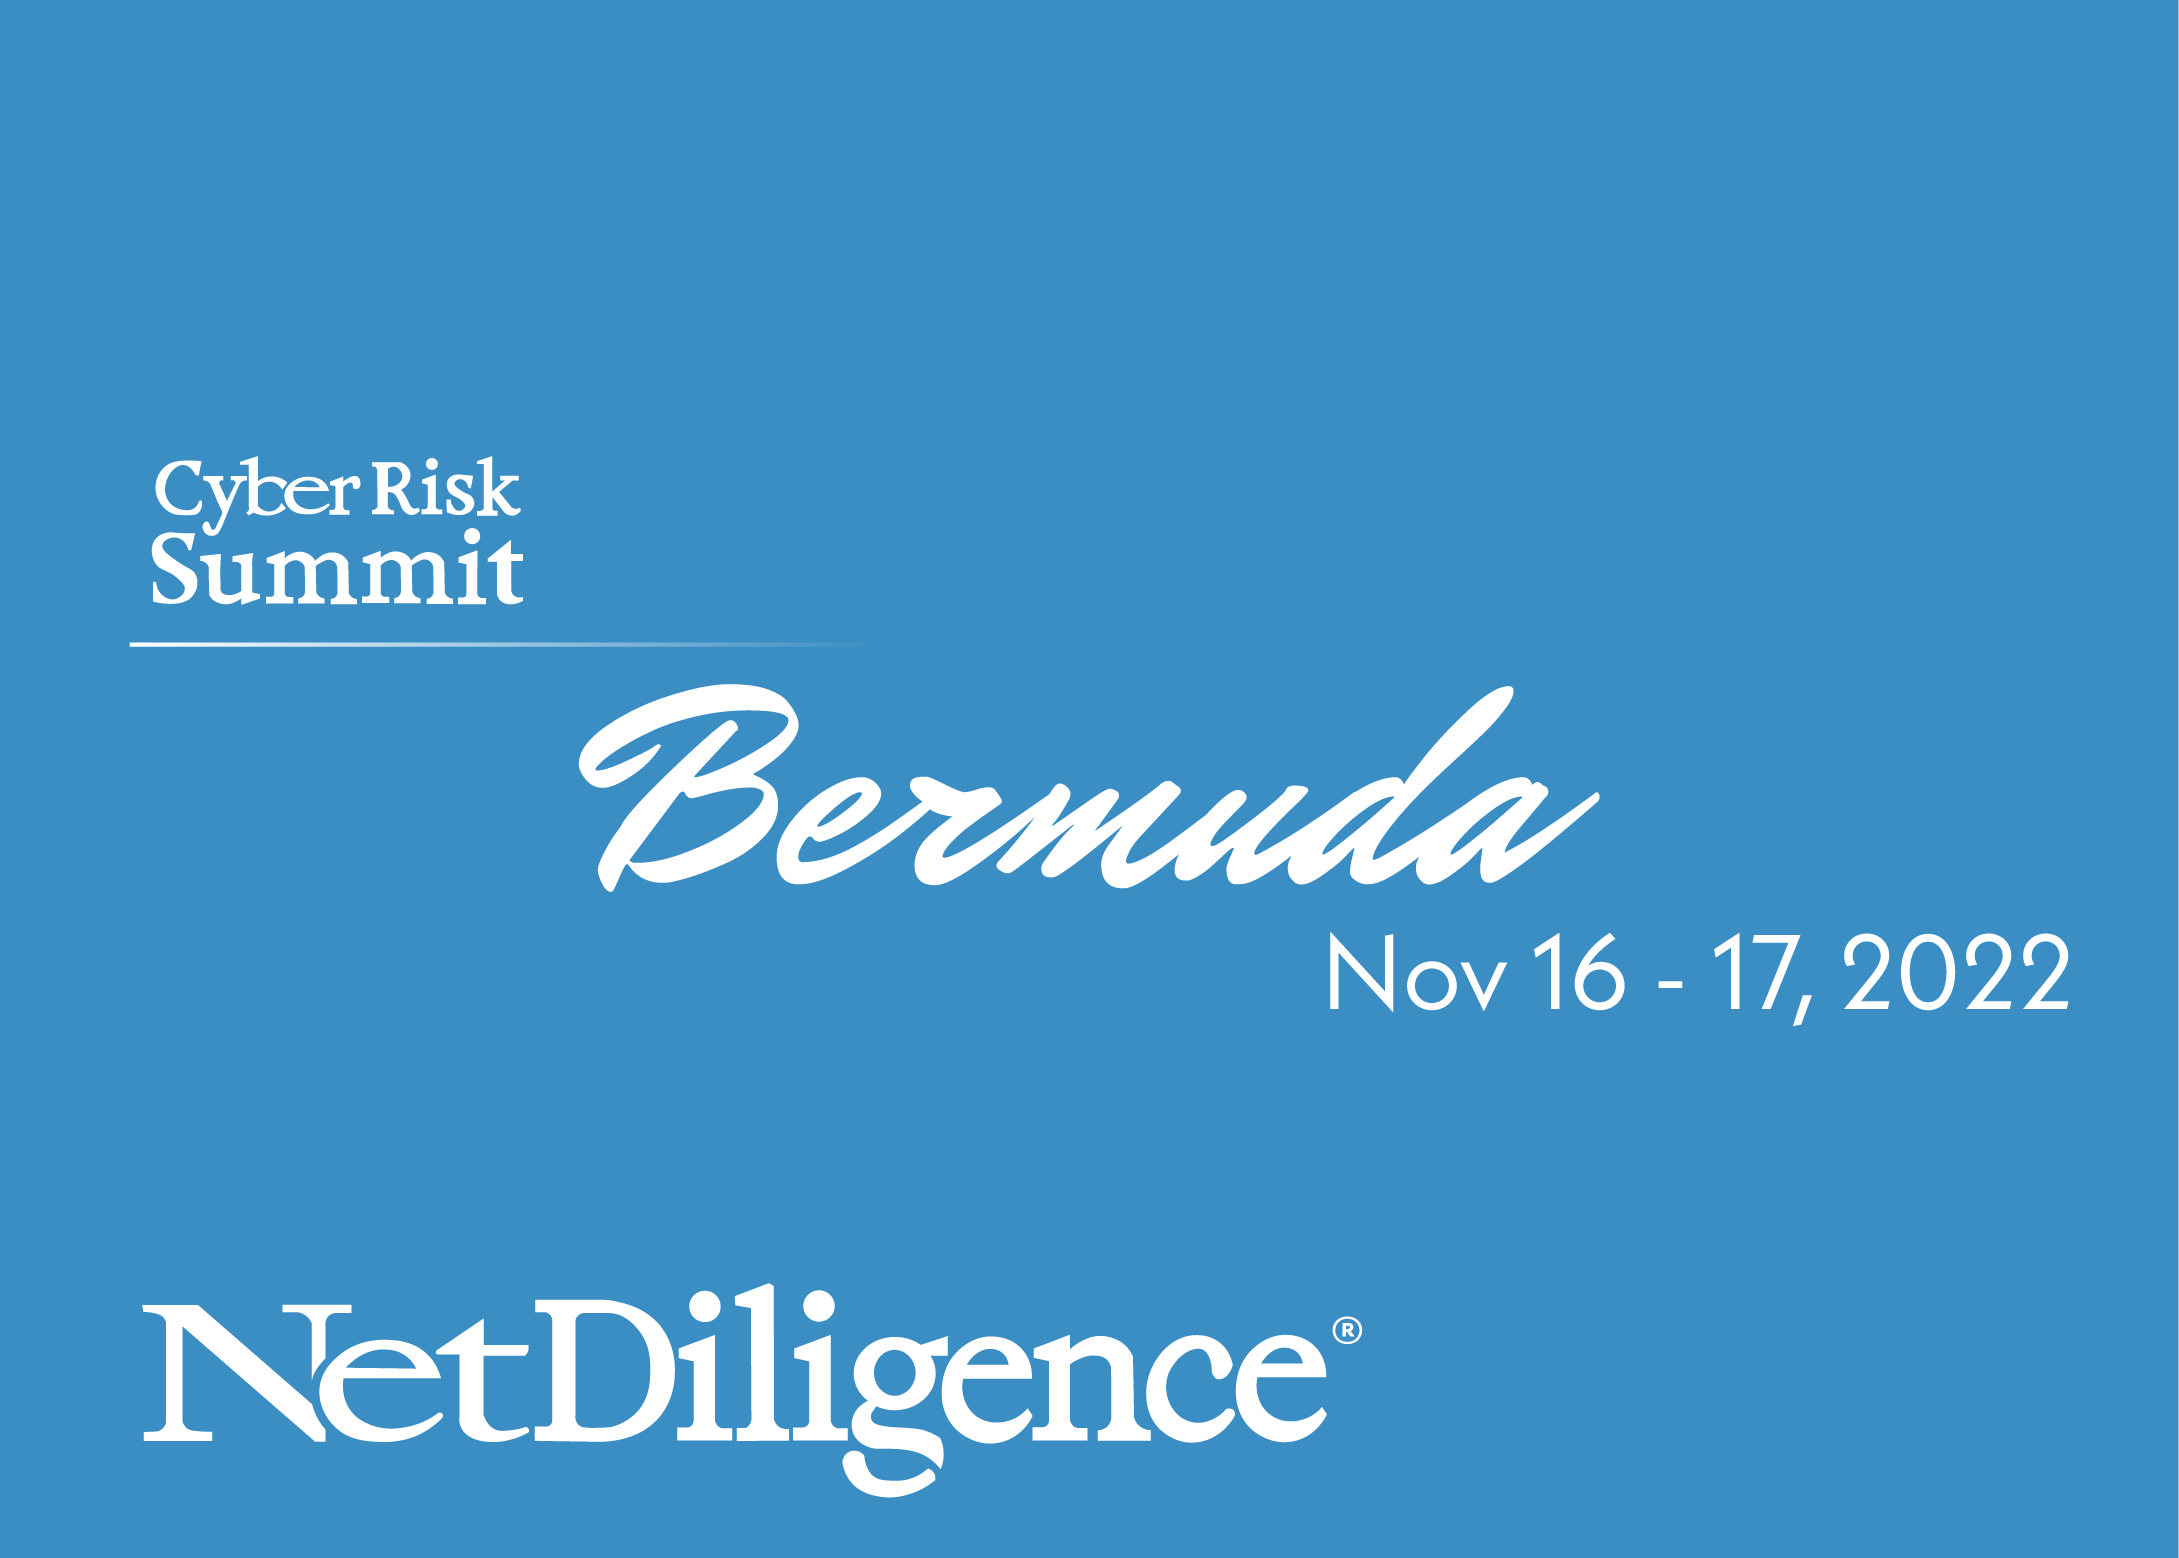 Cyber Risk Summit in Bermuda 11/2022